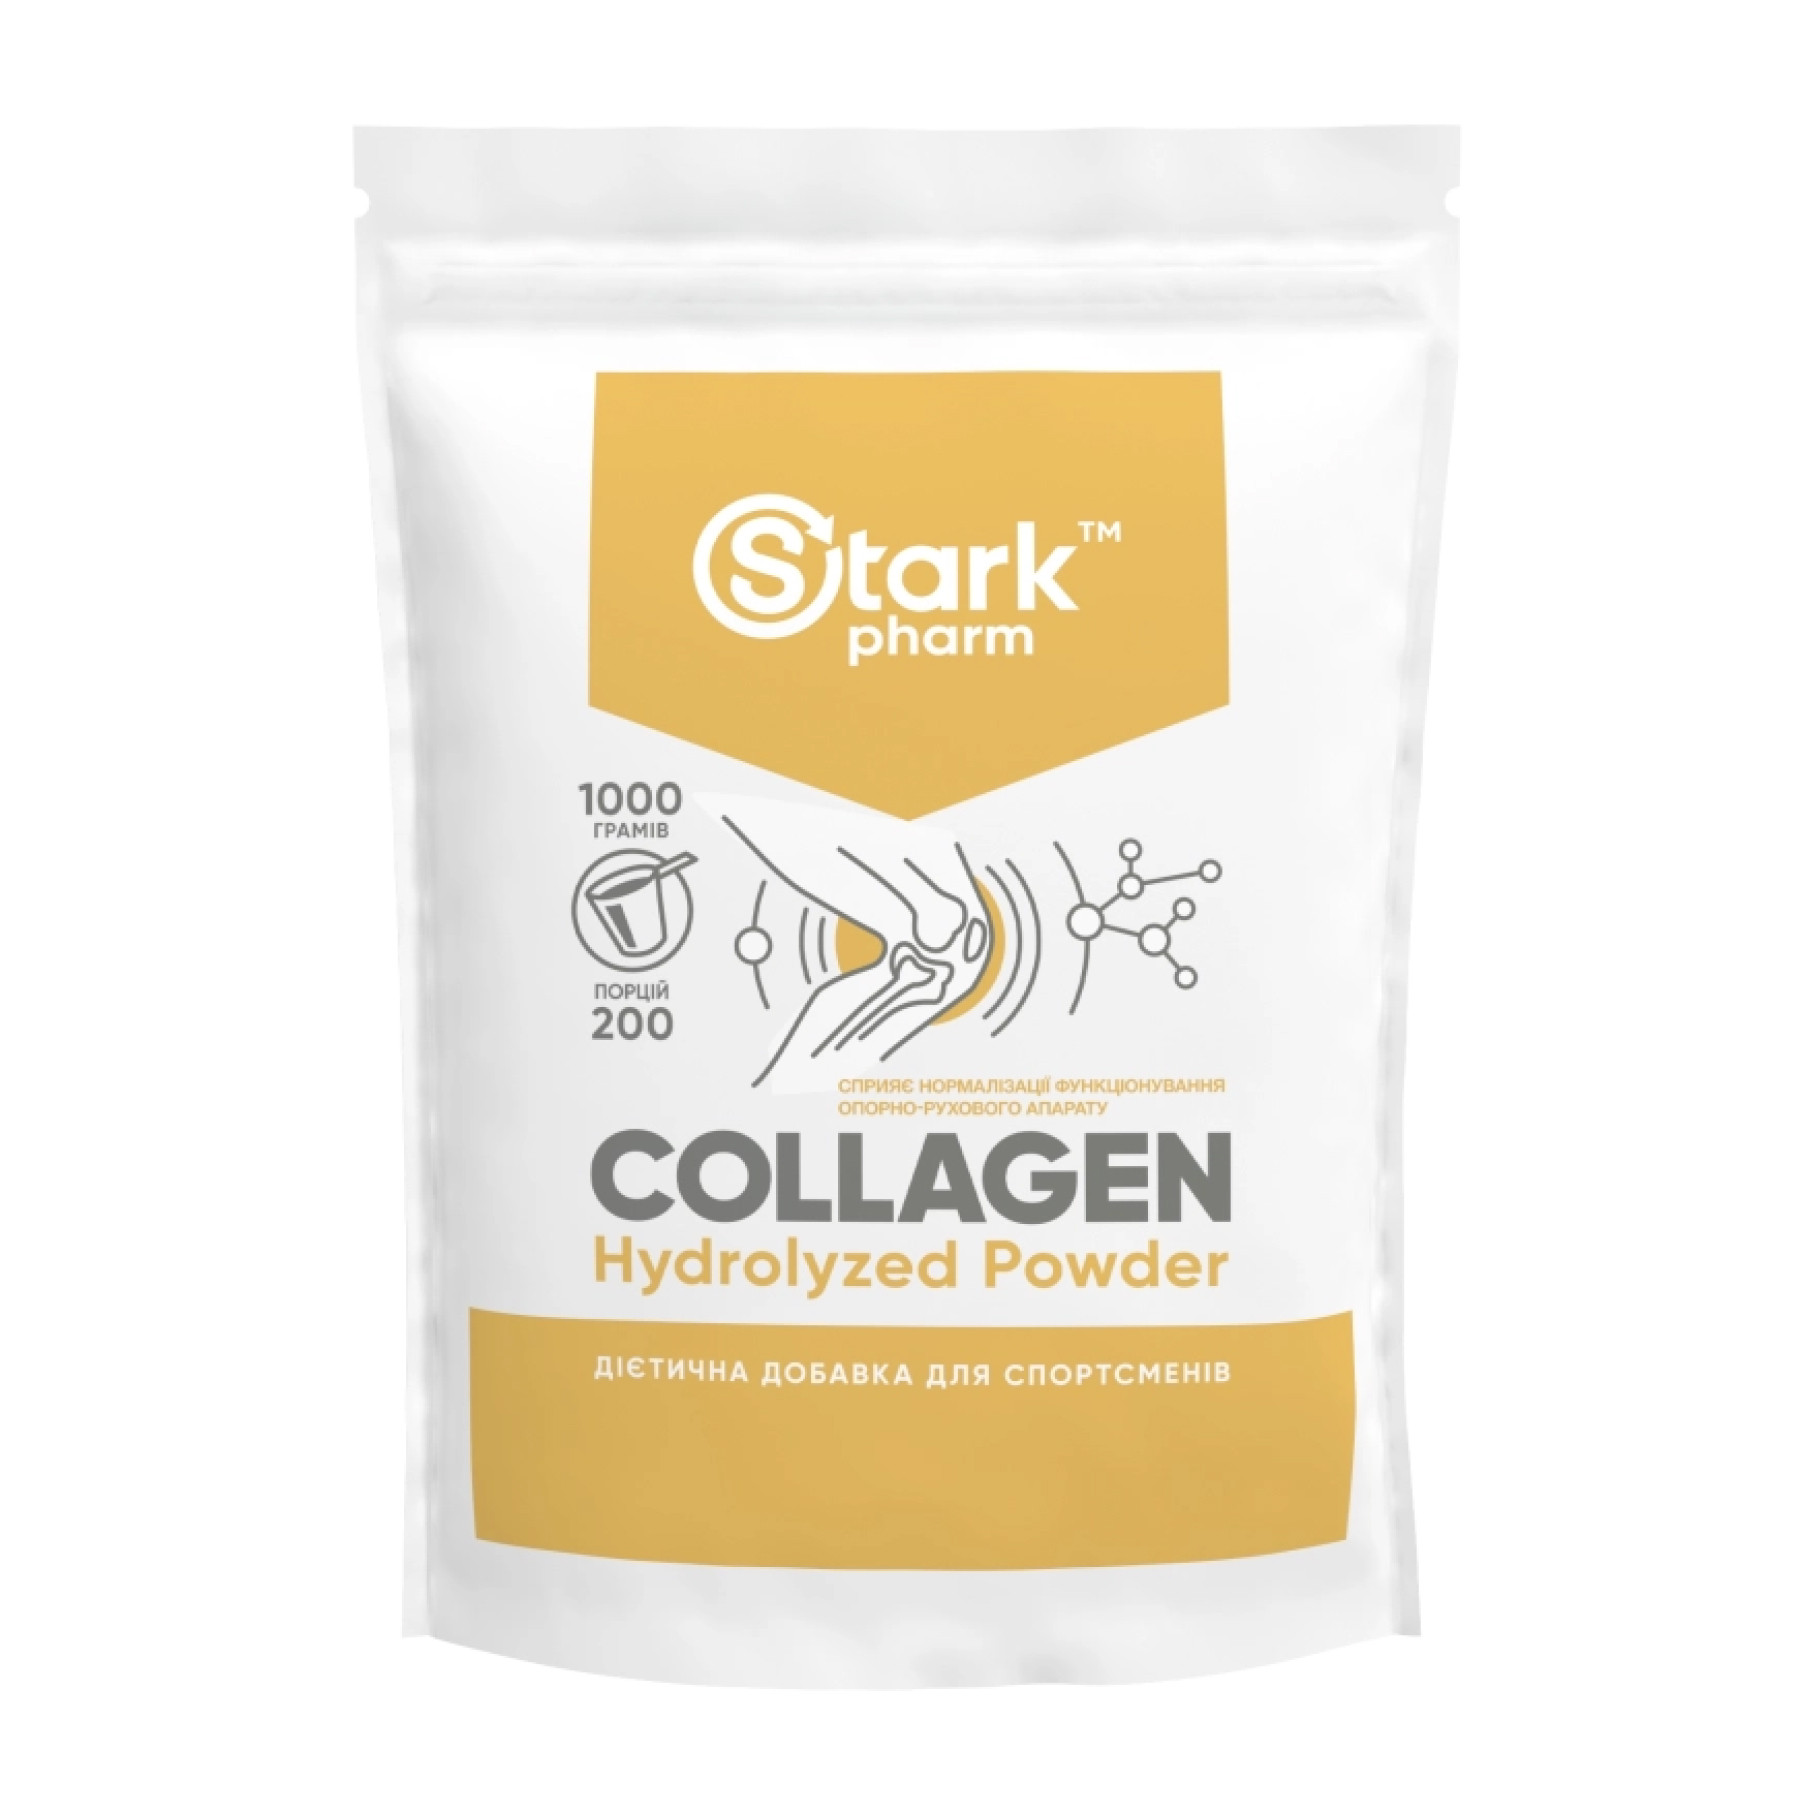 Порошок Stark Collagen Hydrolyzed Powder - 1000g 100-56-1325281-20